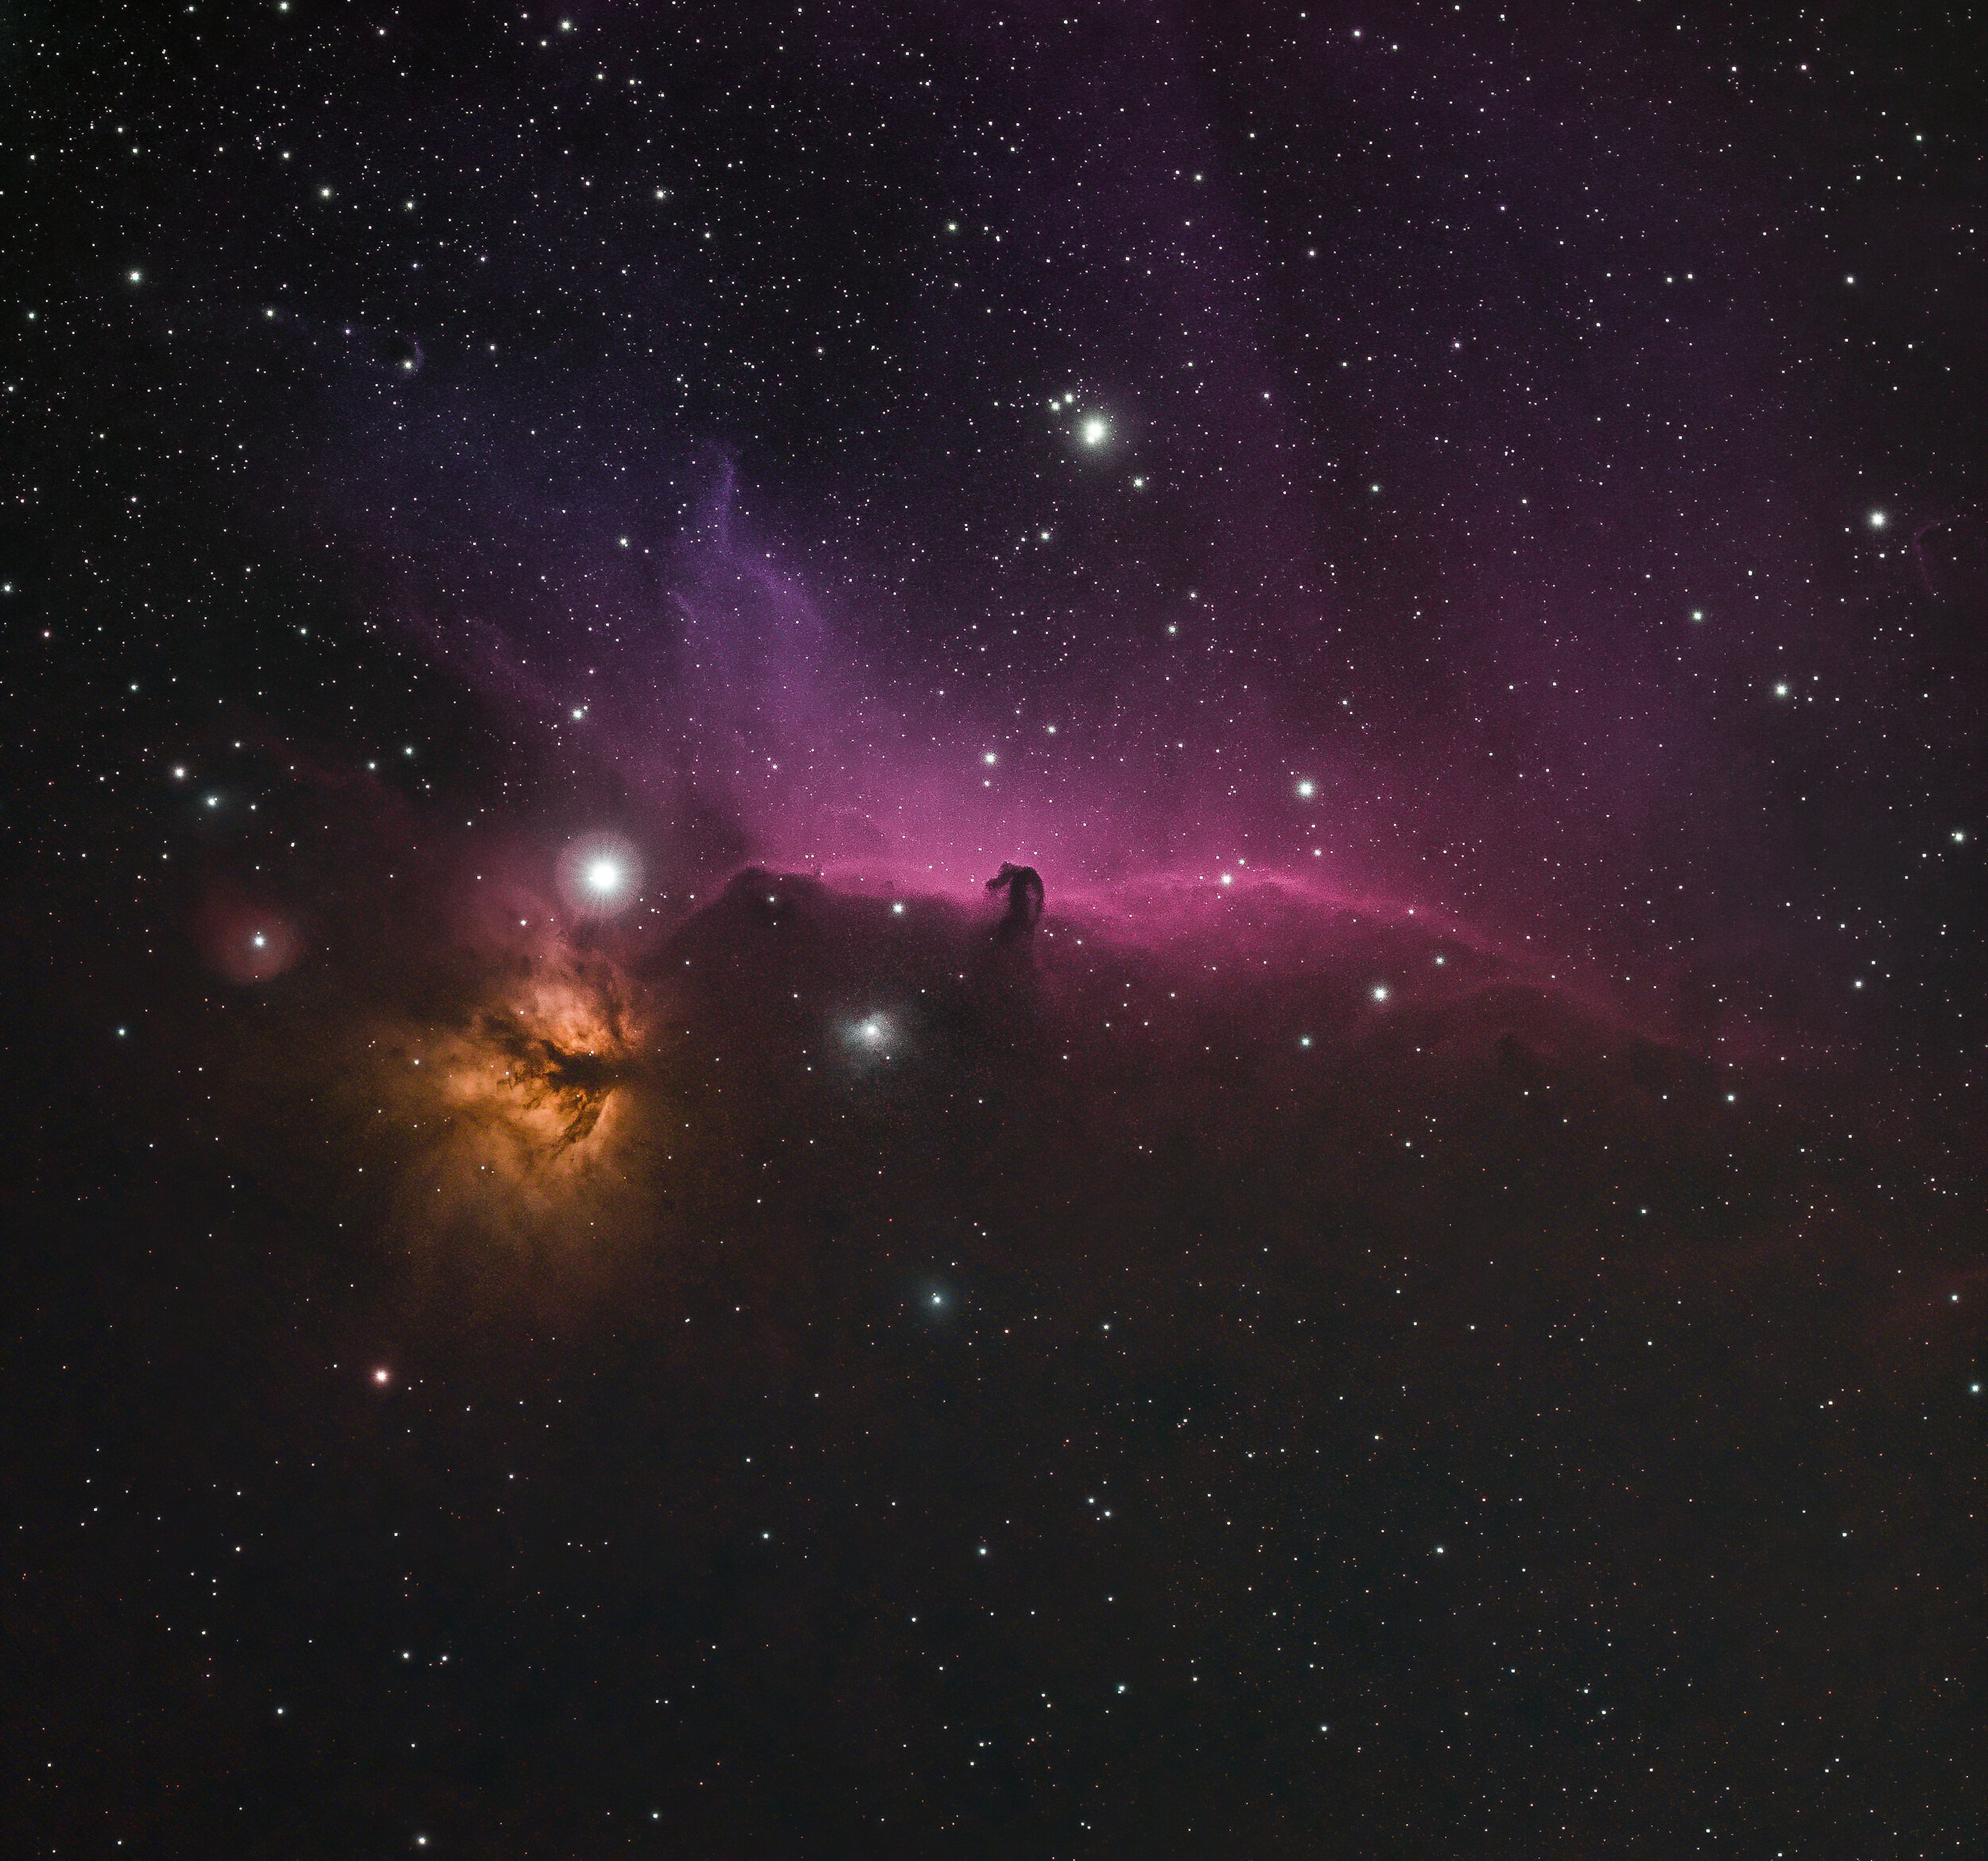  ic434 flame + horse head nebulas   [distance/age: 1500 light years] 